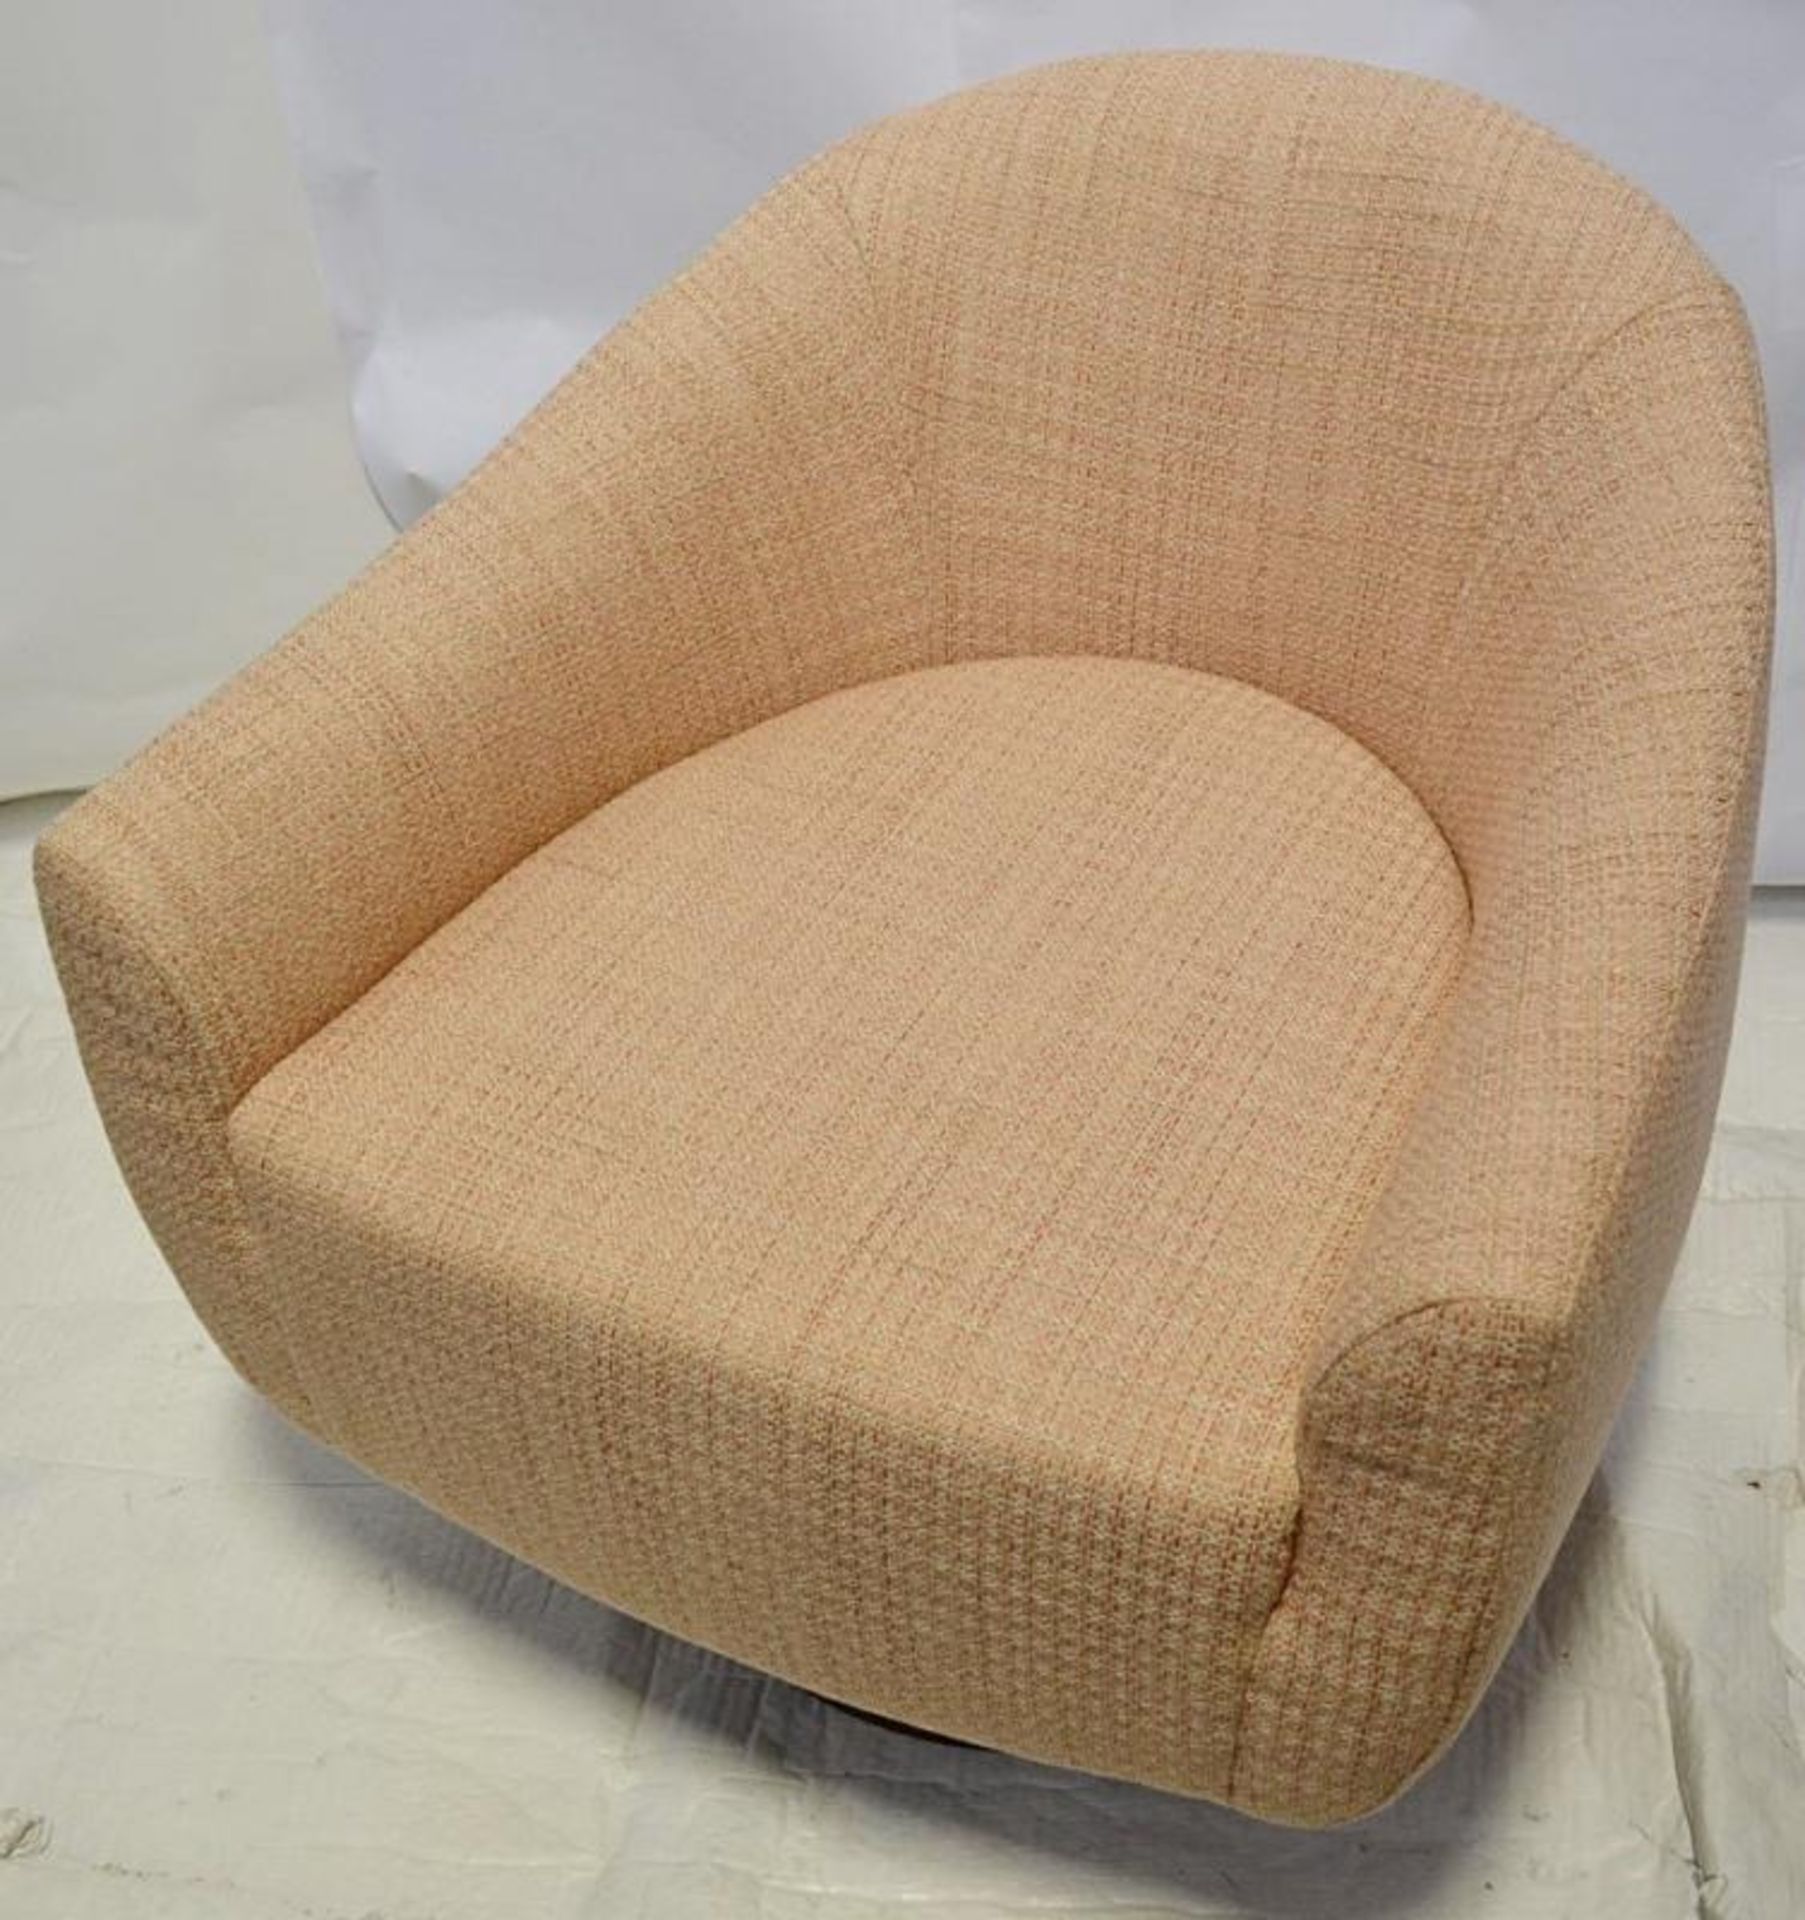 1 x KELLY WEARSTLER Sonara Swivel Chair Rosewood - Dimensions: 31” W x 35” D x 31” H - Ex-Display In - Image 23 of 28